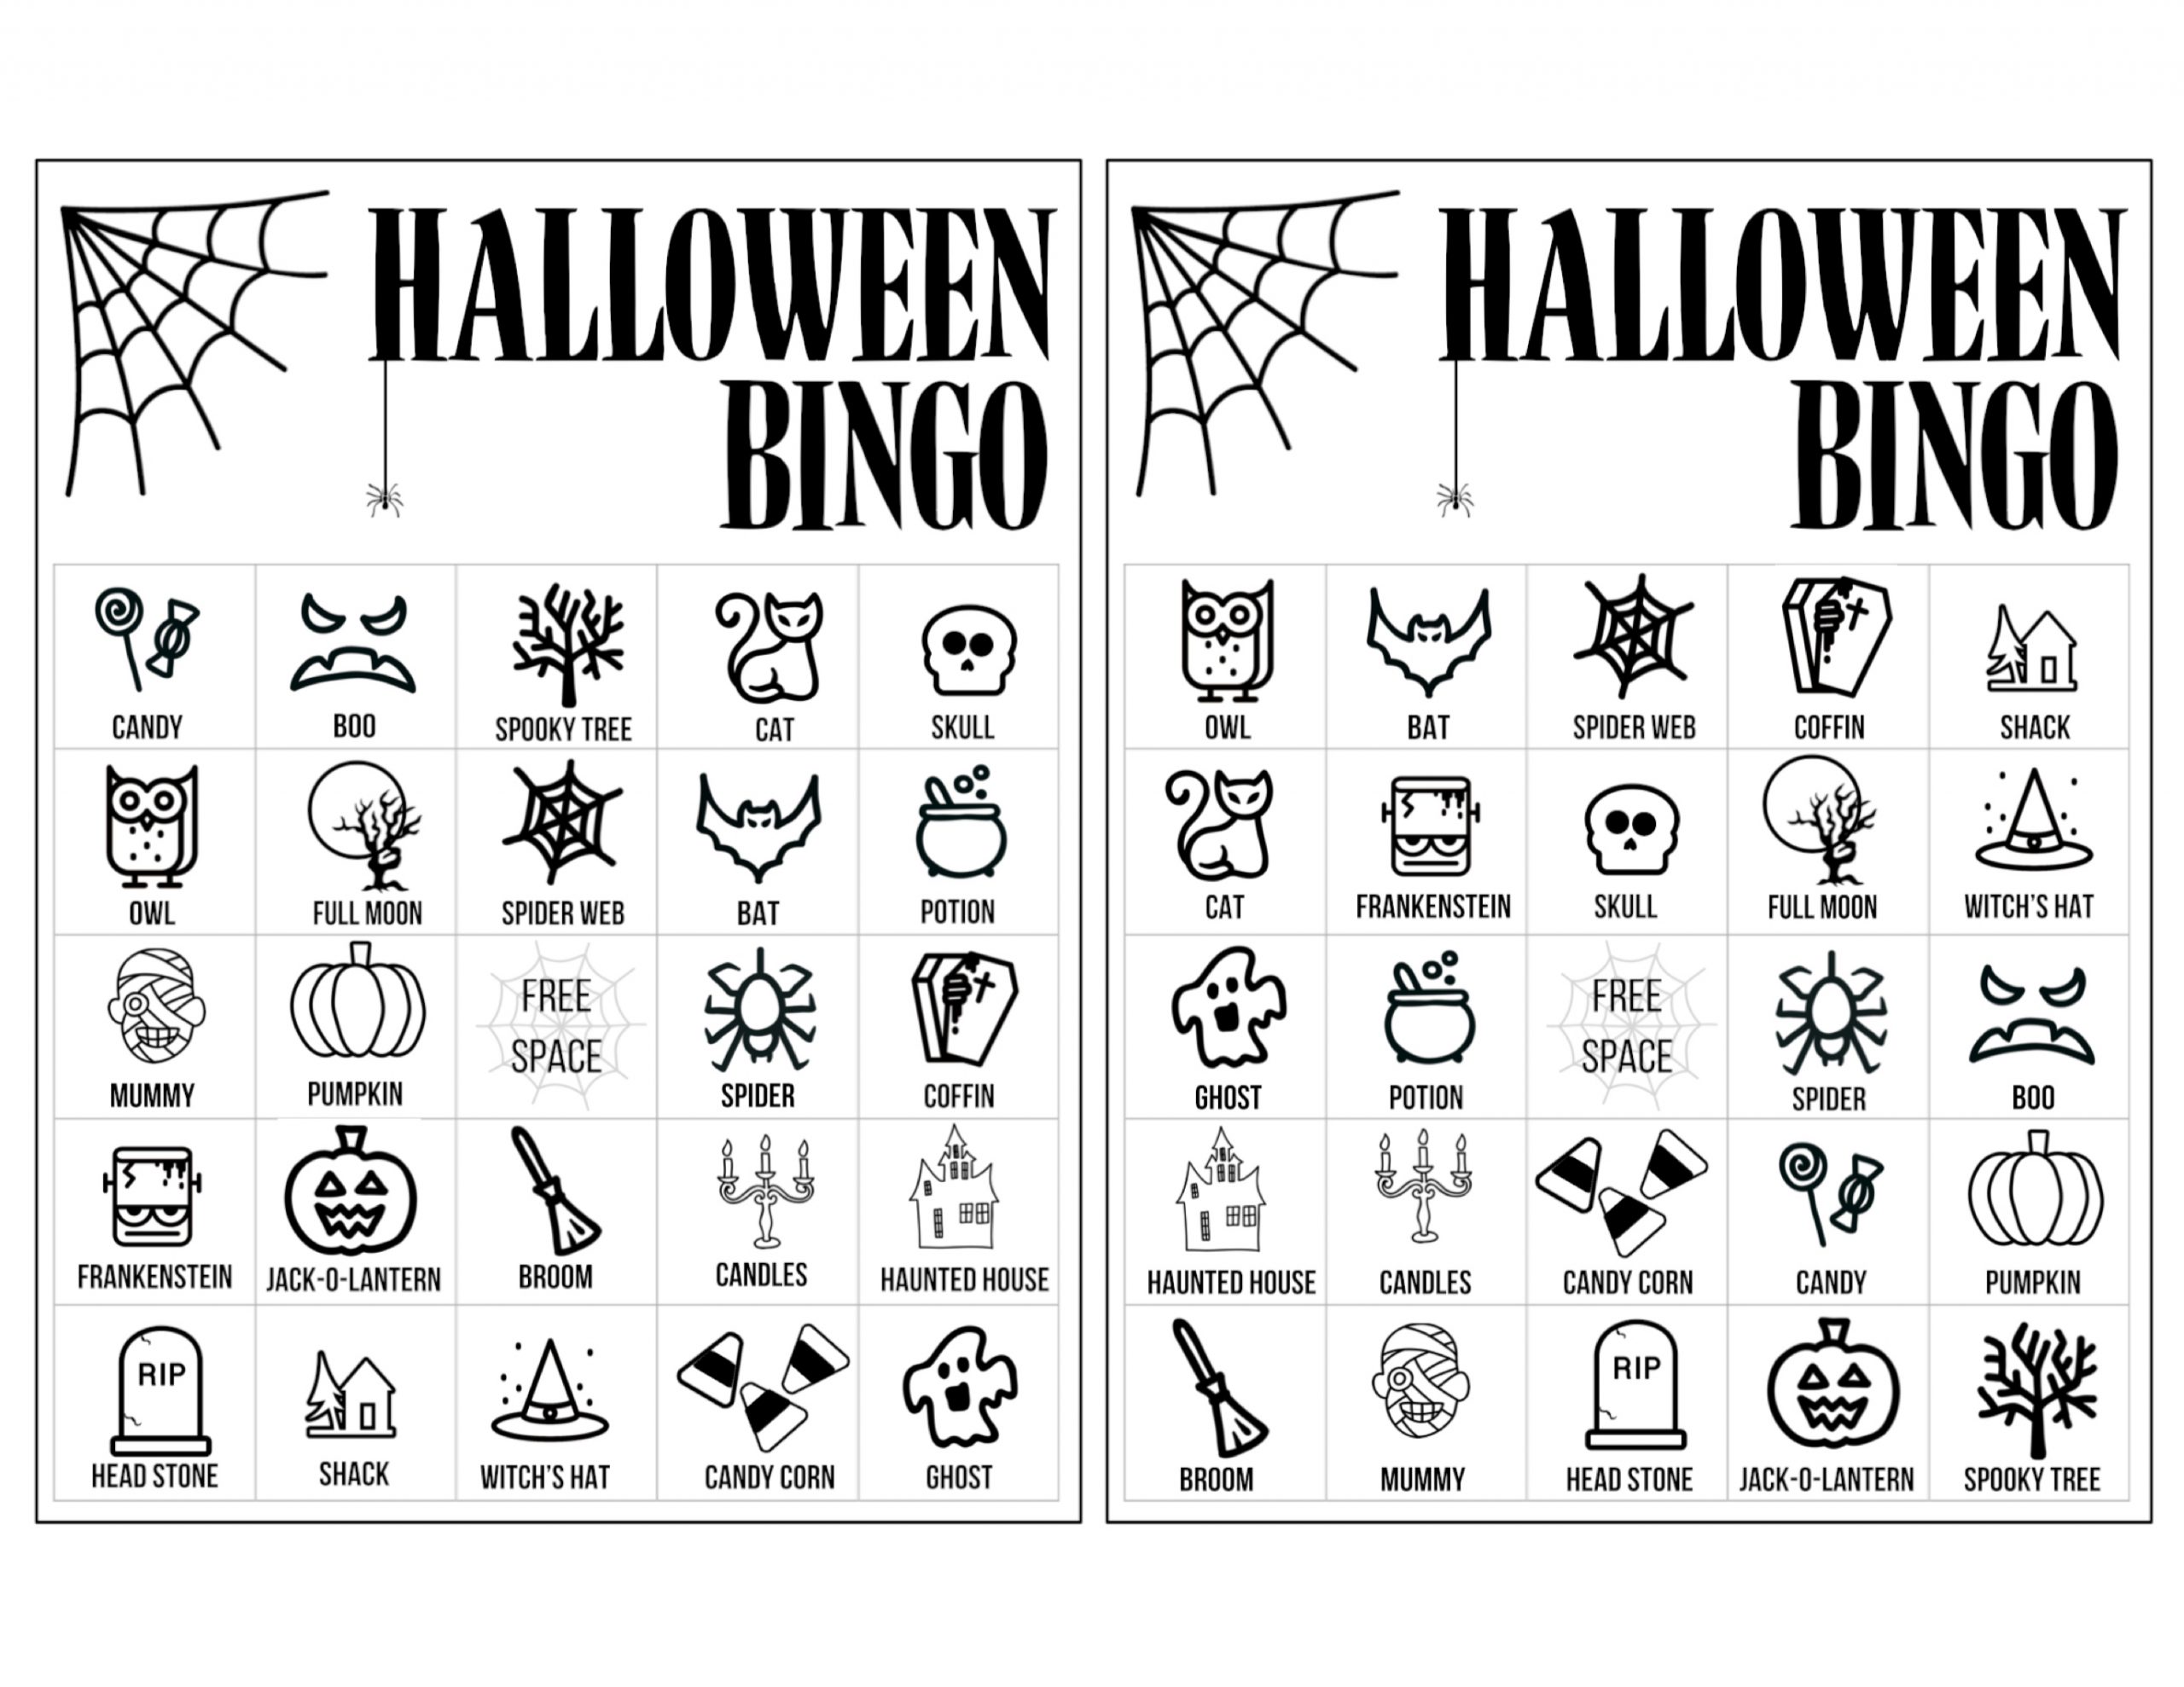 Halloween Bingo Printable Game Cards Template - Paper Trail